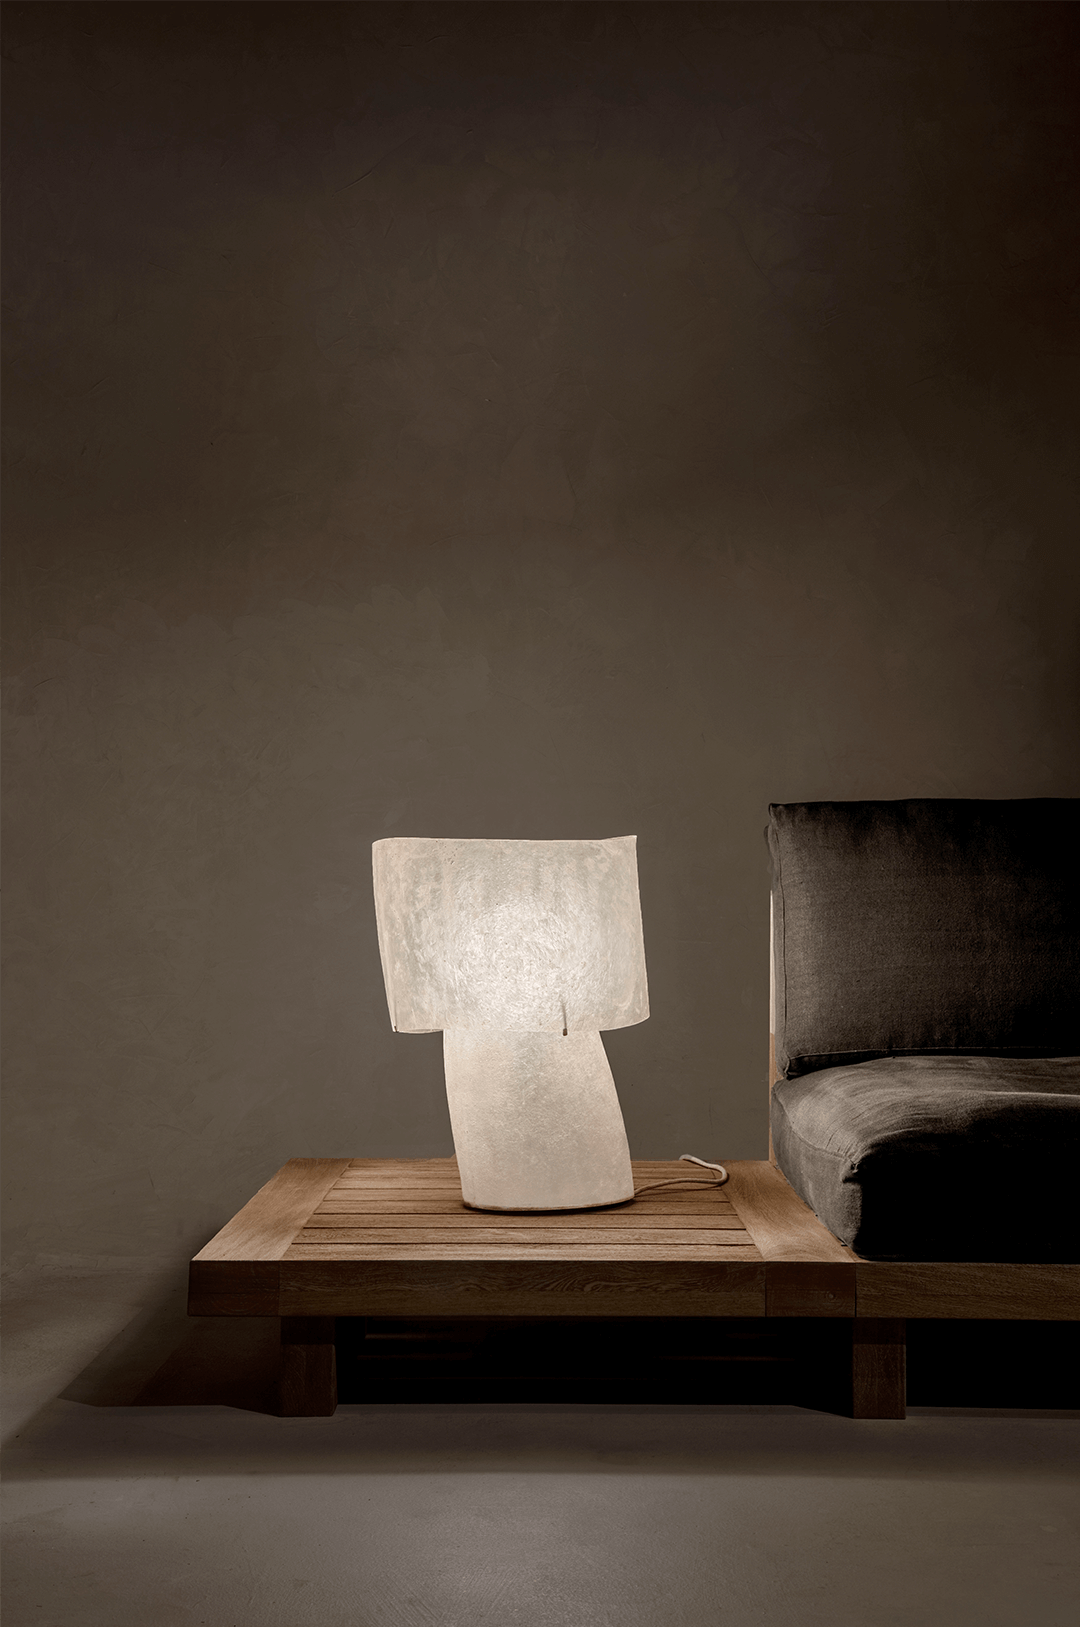 Kilzi lighting | Mush Tall fiberglass table lamp, a elegant designer lamp with soft organic shapes resembling a growing mushroom. Perfect for home decor.